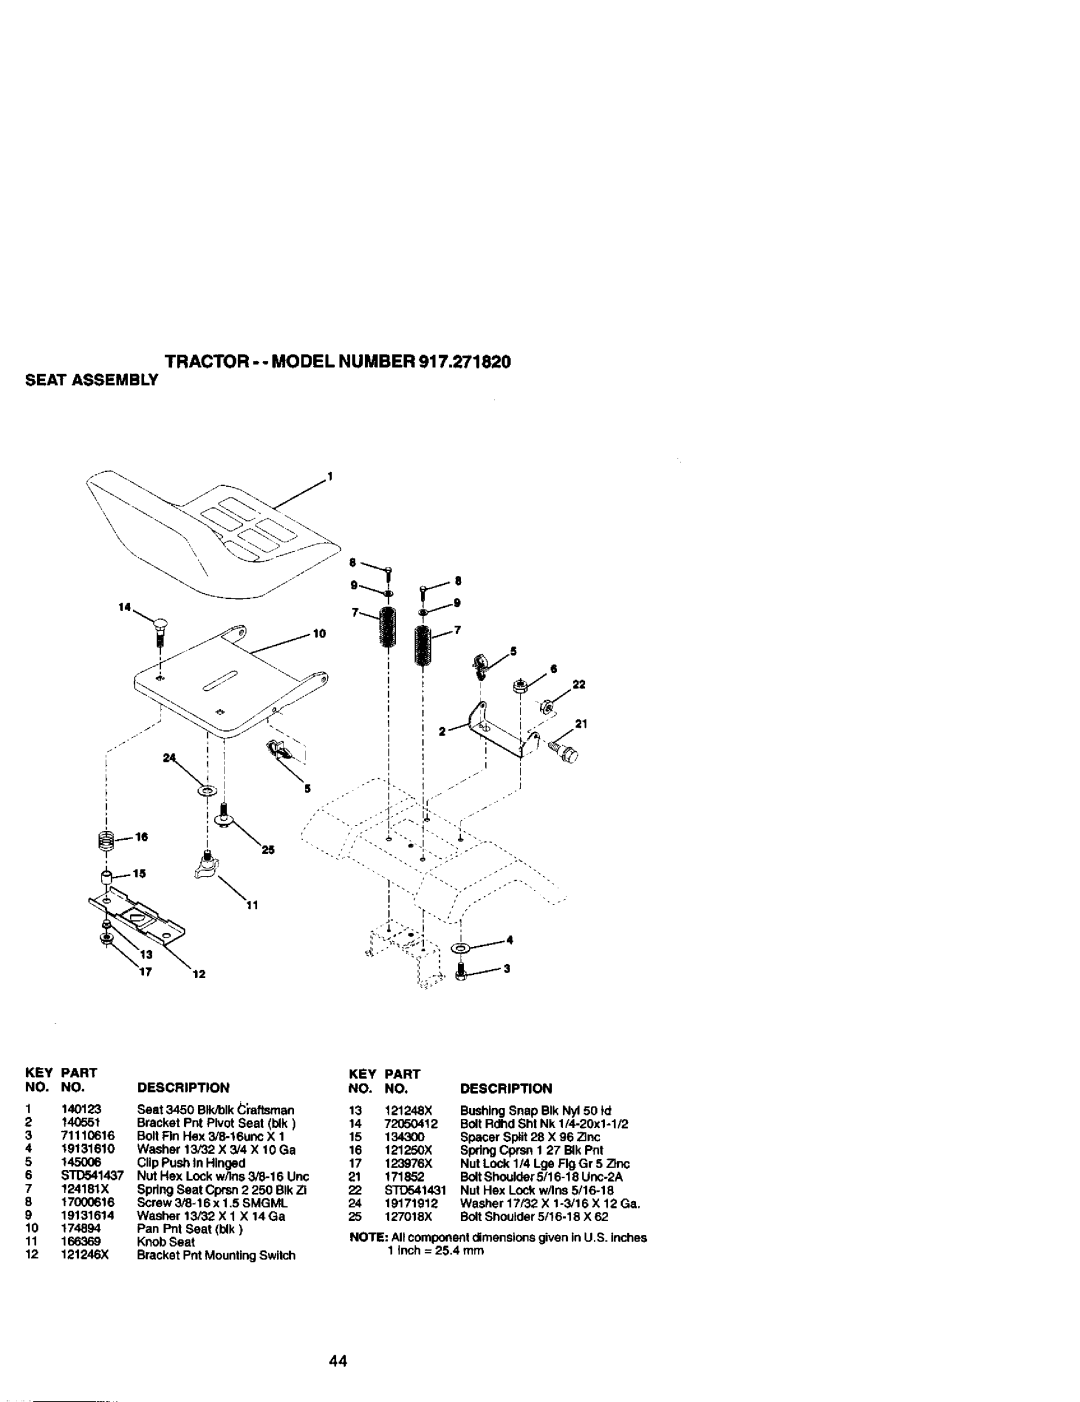 Craftsman manual TRACTOR MODELNUMBER917.271820 